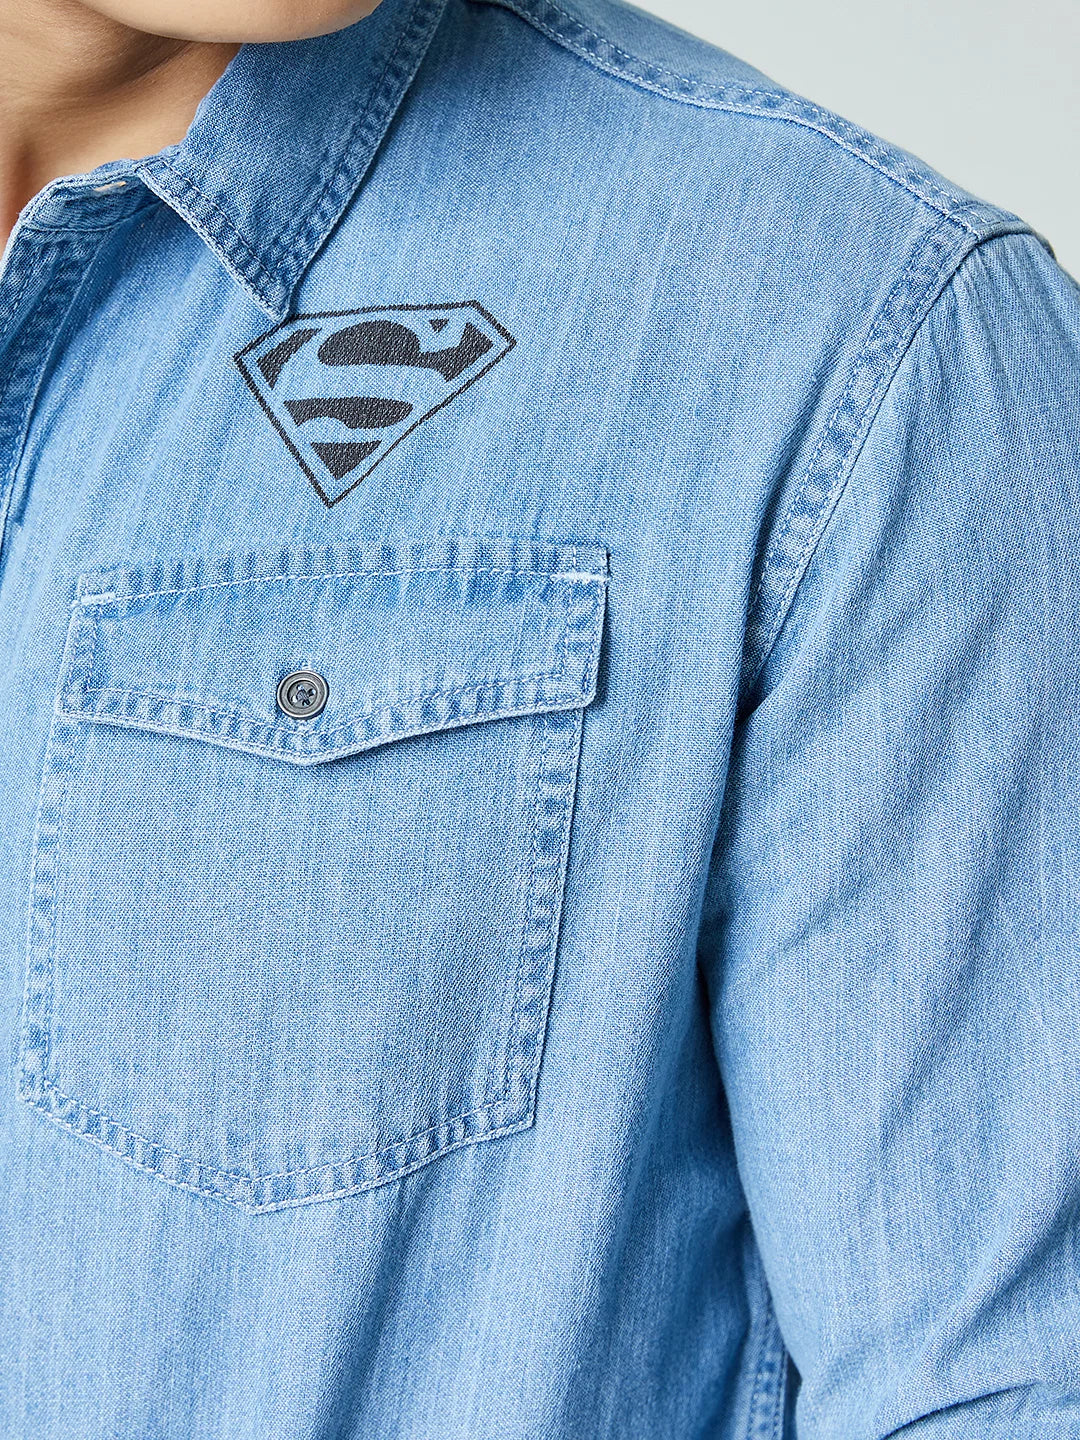 Superman Man Of Steel (Limited Edition) Denim Shirt (UK version)